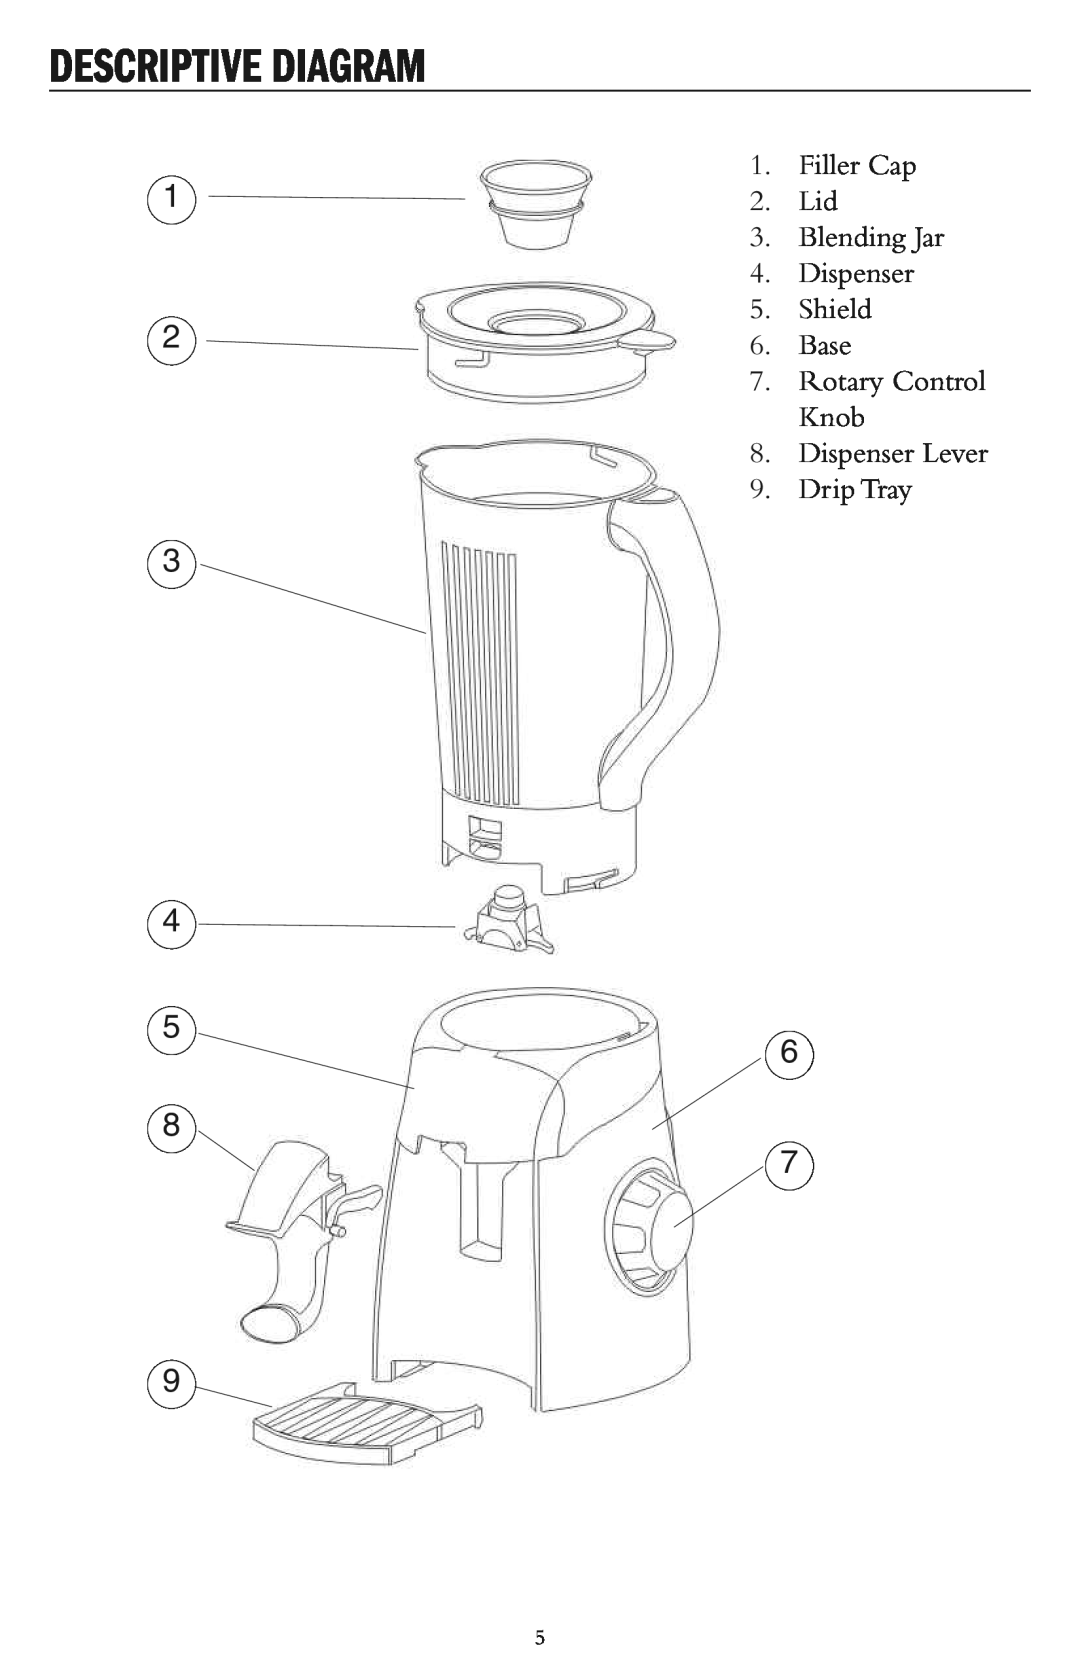 Taylor AB-1000-BL Descriptive Diagram, Filler Cap, Blending Jar, Dispenser, Shield, Base, Rotary Control, Knob, Drip Tray 